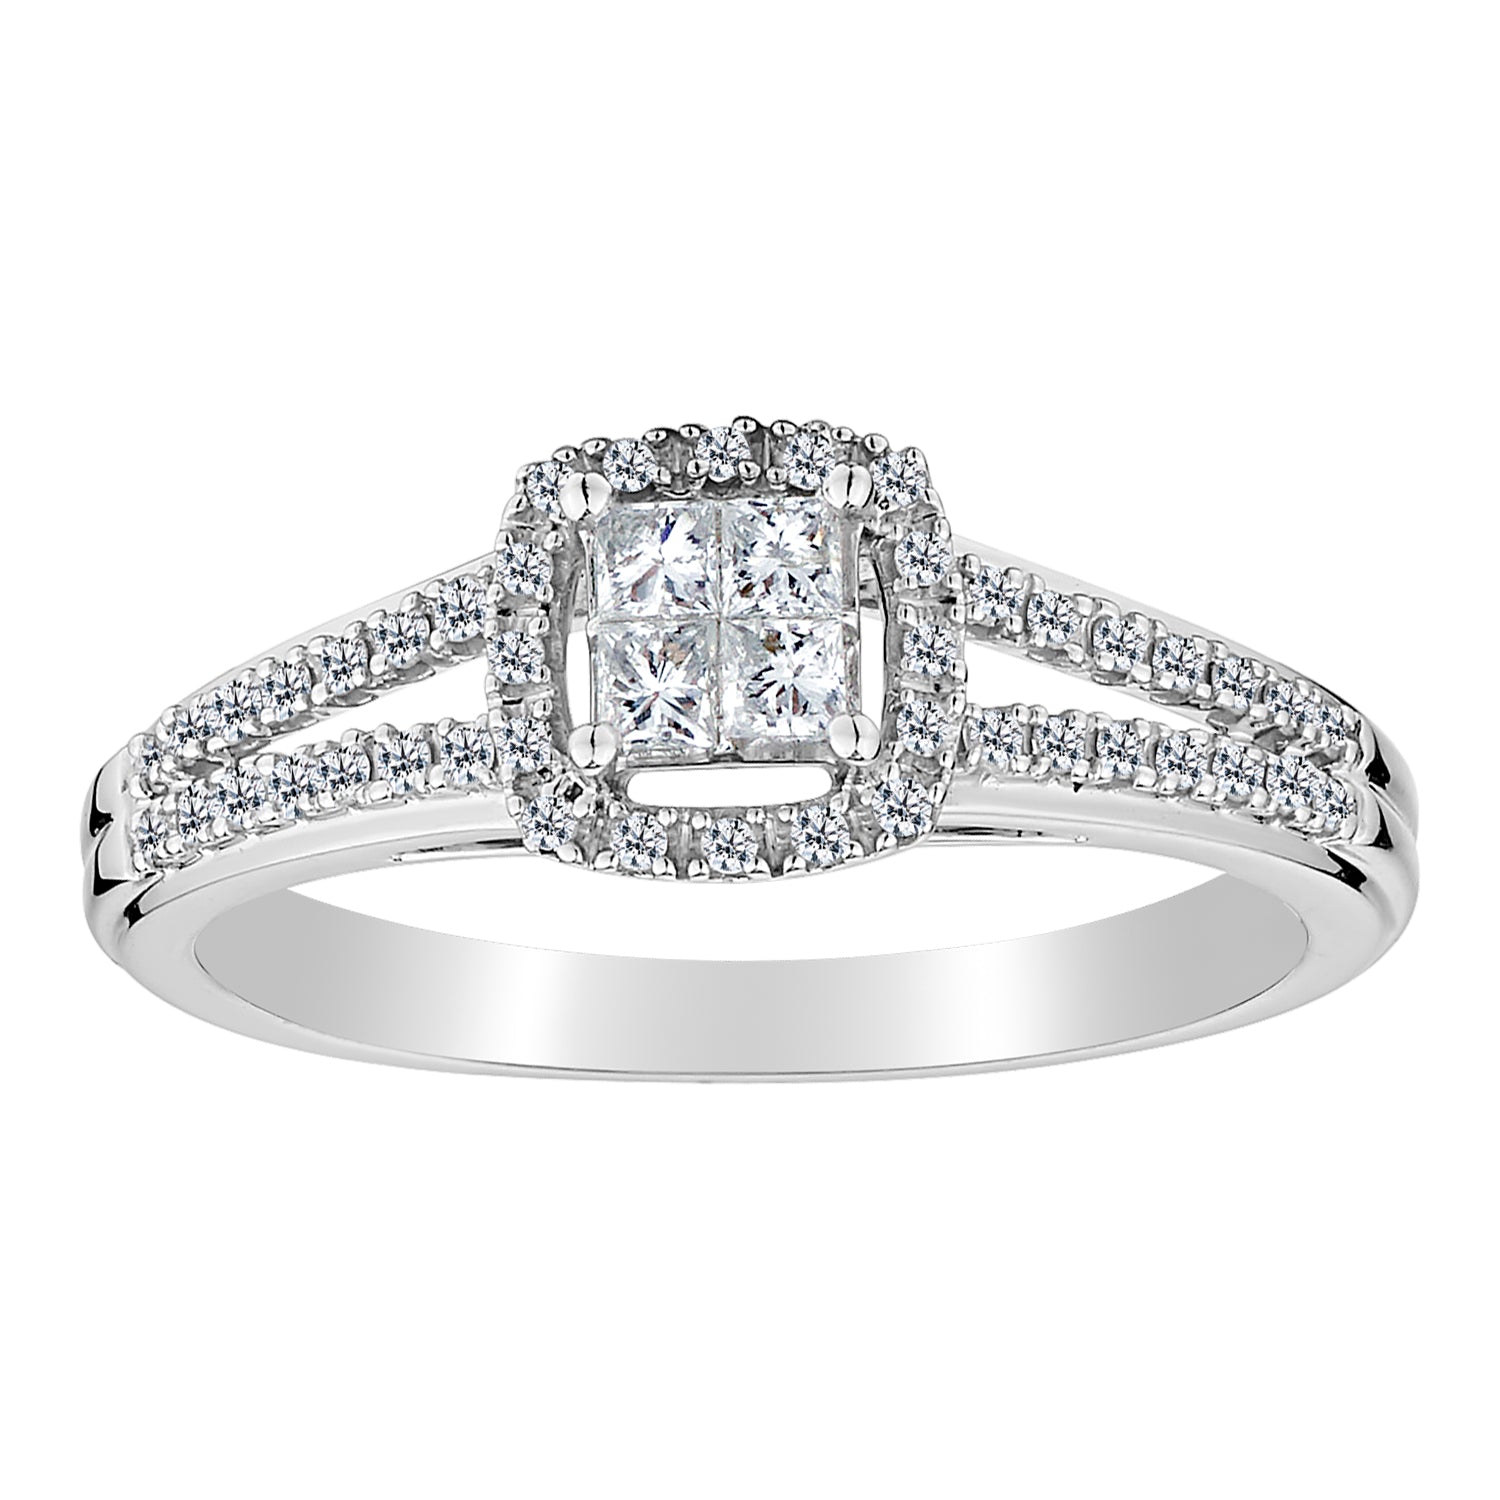 .33 CARAT DIAMOND RING, 10kt WHITE GOLD - Griffin Jewellery Designs